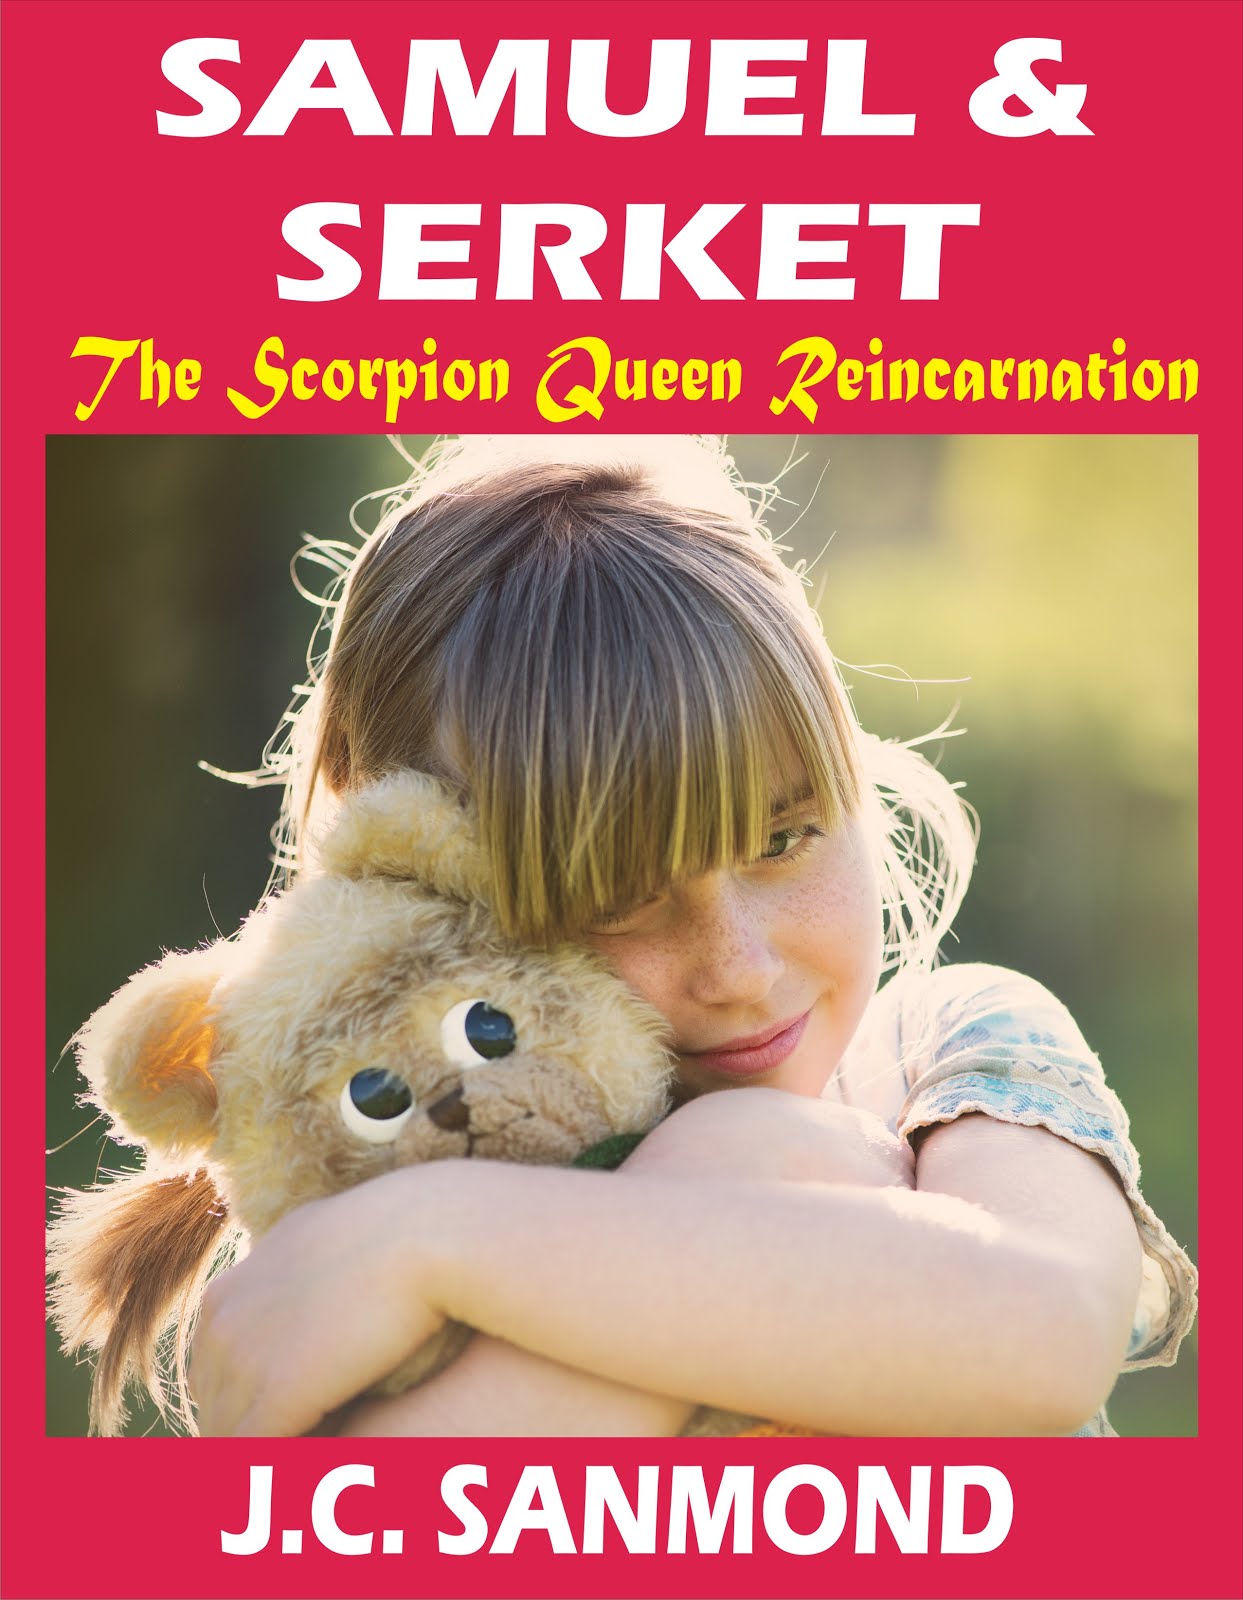 SAMUEL & SERKET - The Scorpion Queen Reincarnation.